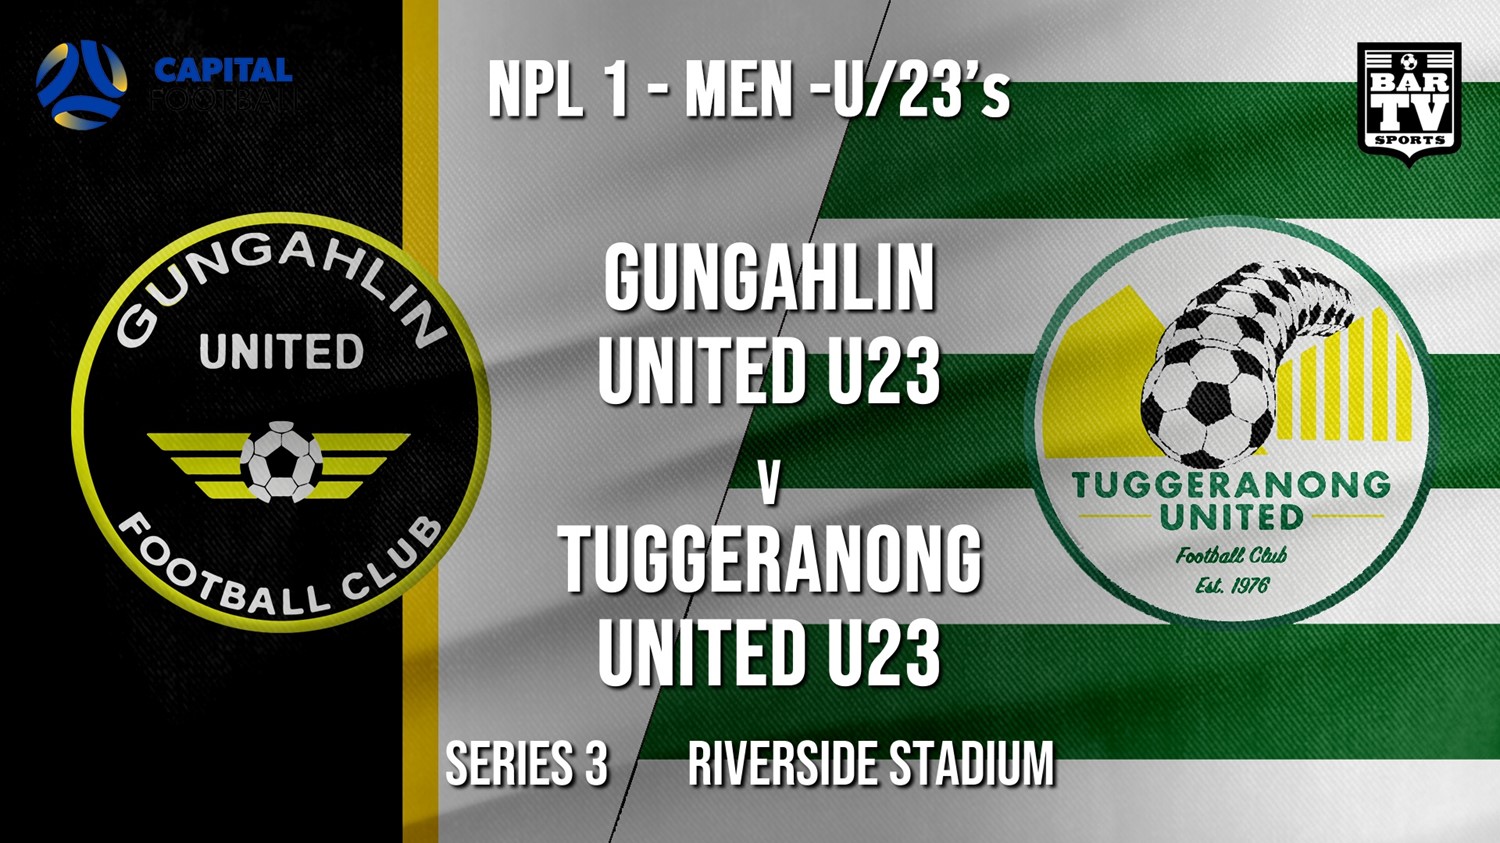 NPL1 Men - U23 - Capital Football  Series 3 - Gungahlin United U23 v Tuggeranong United U23 Minigame Slate Image